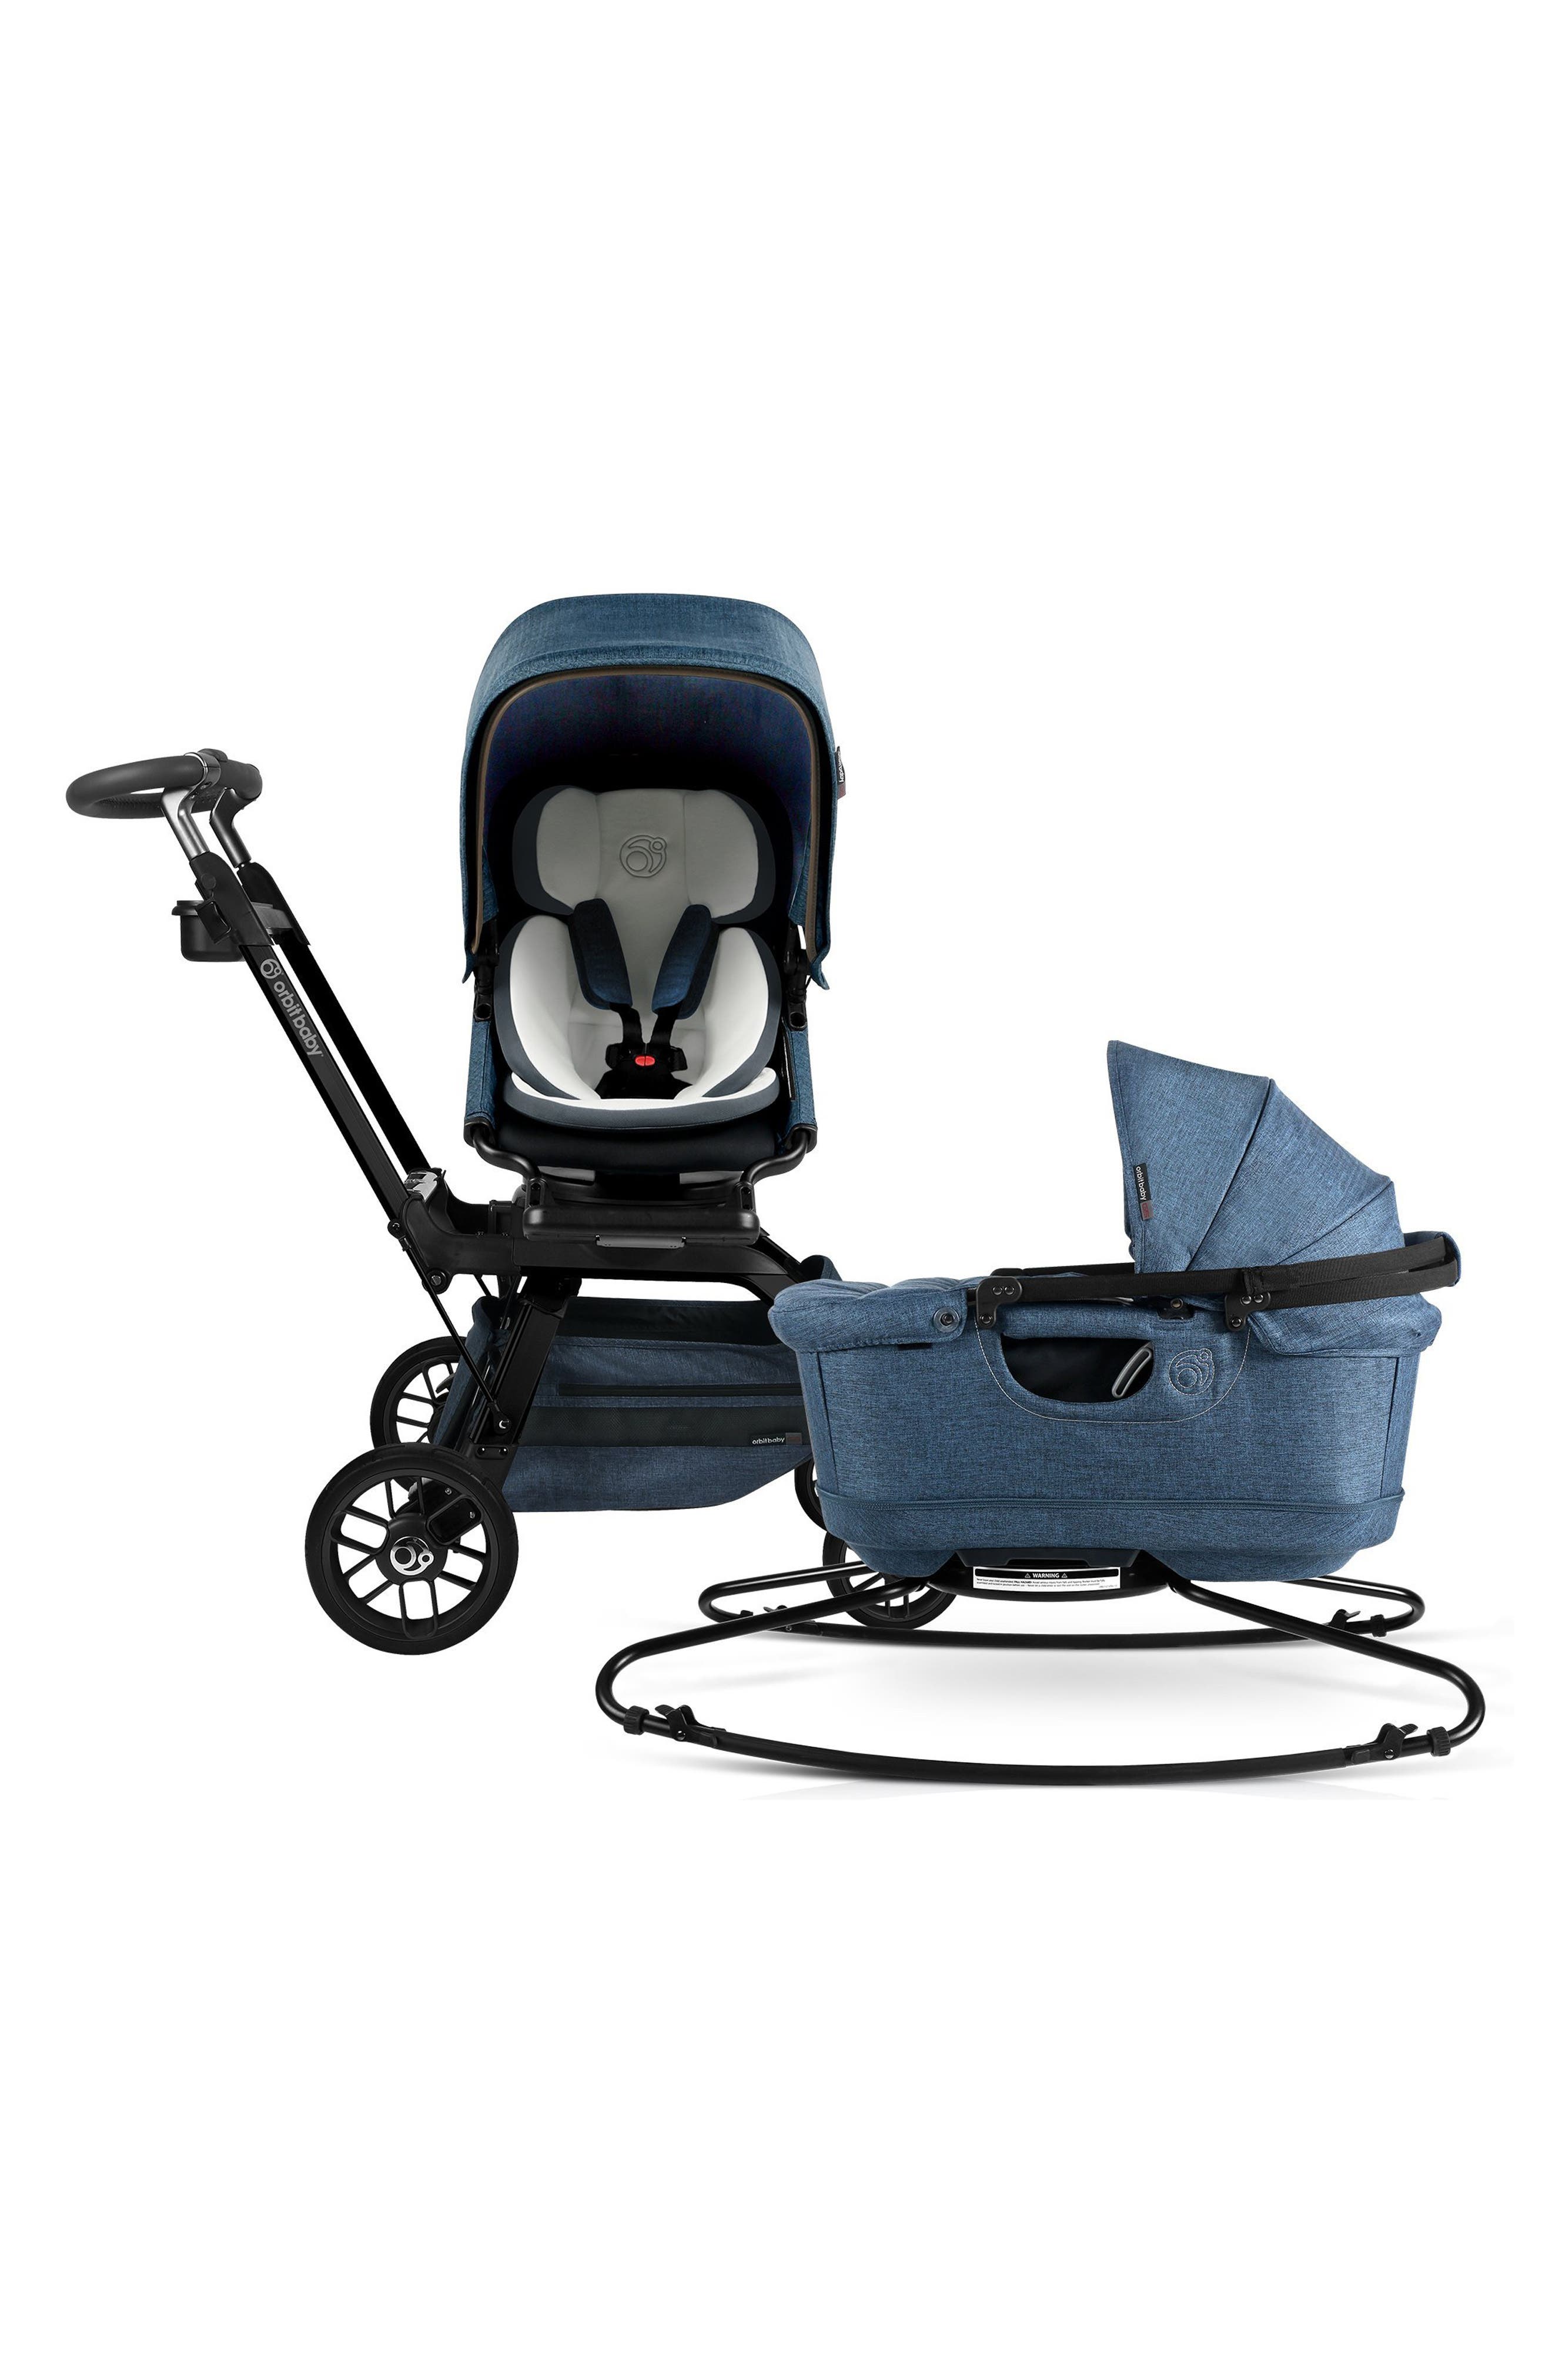 orbit baby strollers